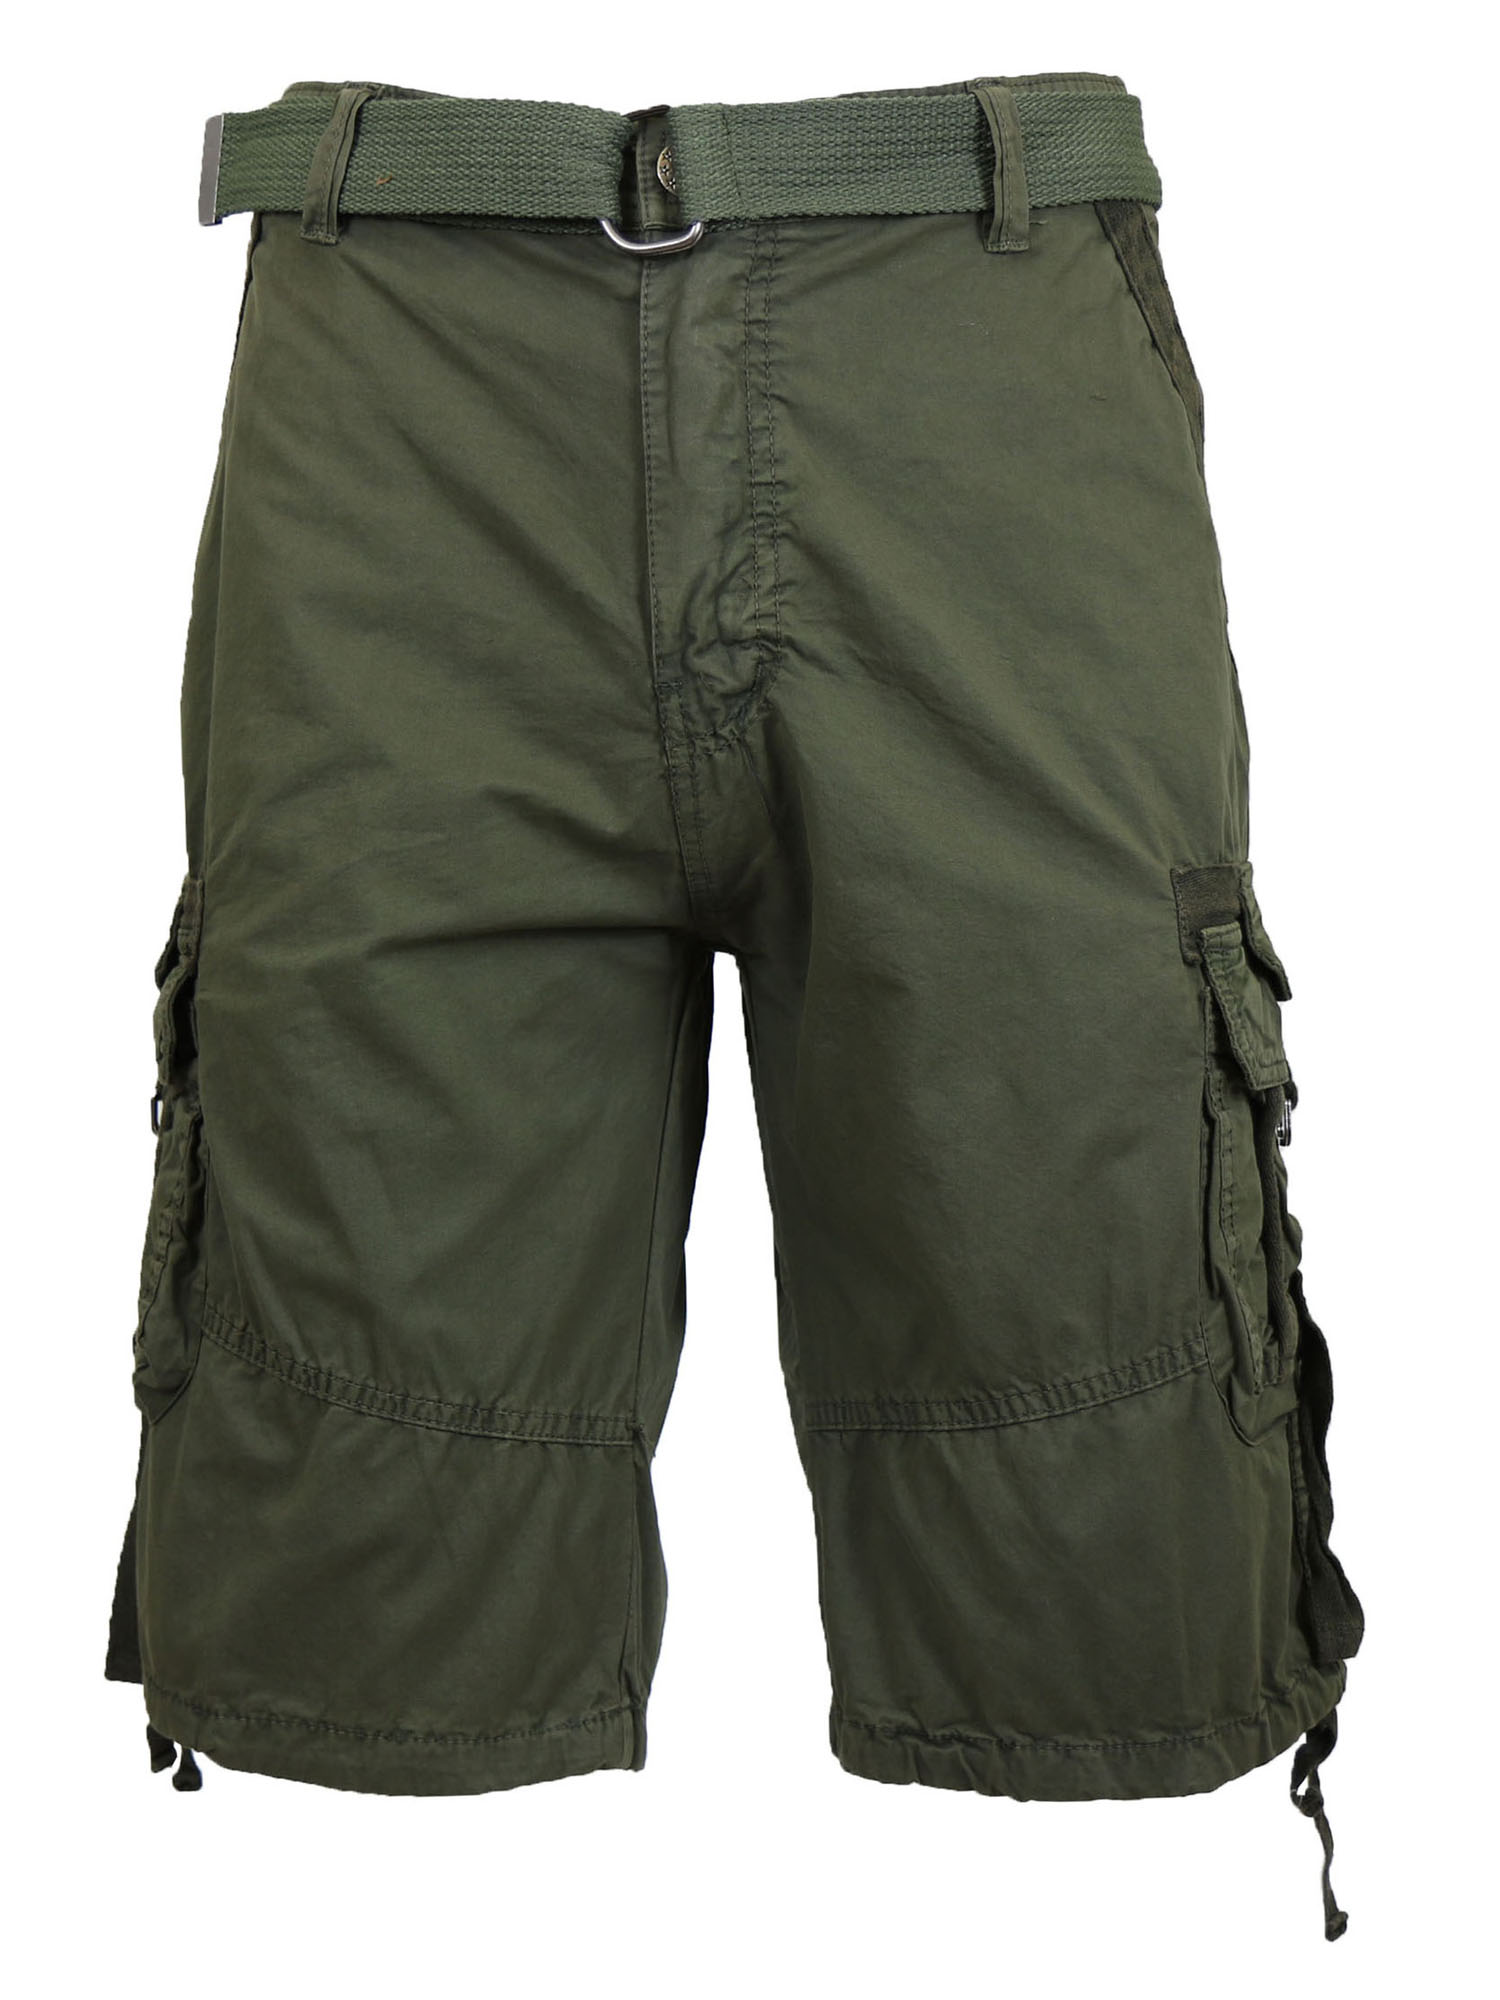 Men's Distressed Vintage Belted Cargo Utility Shorts (Size 30-48) - image 1 of 4